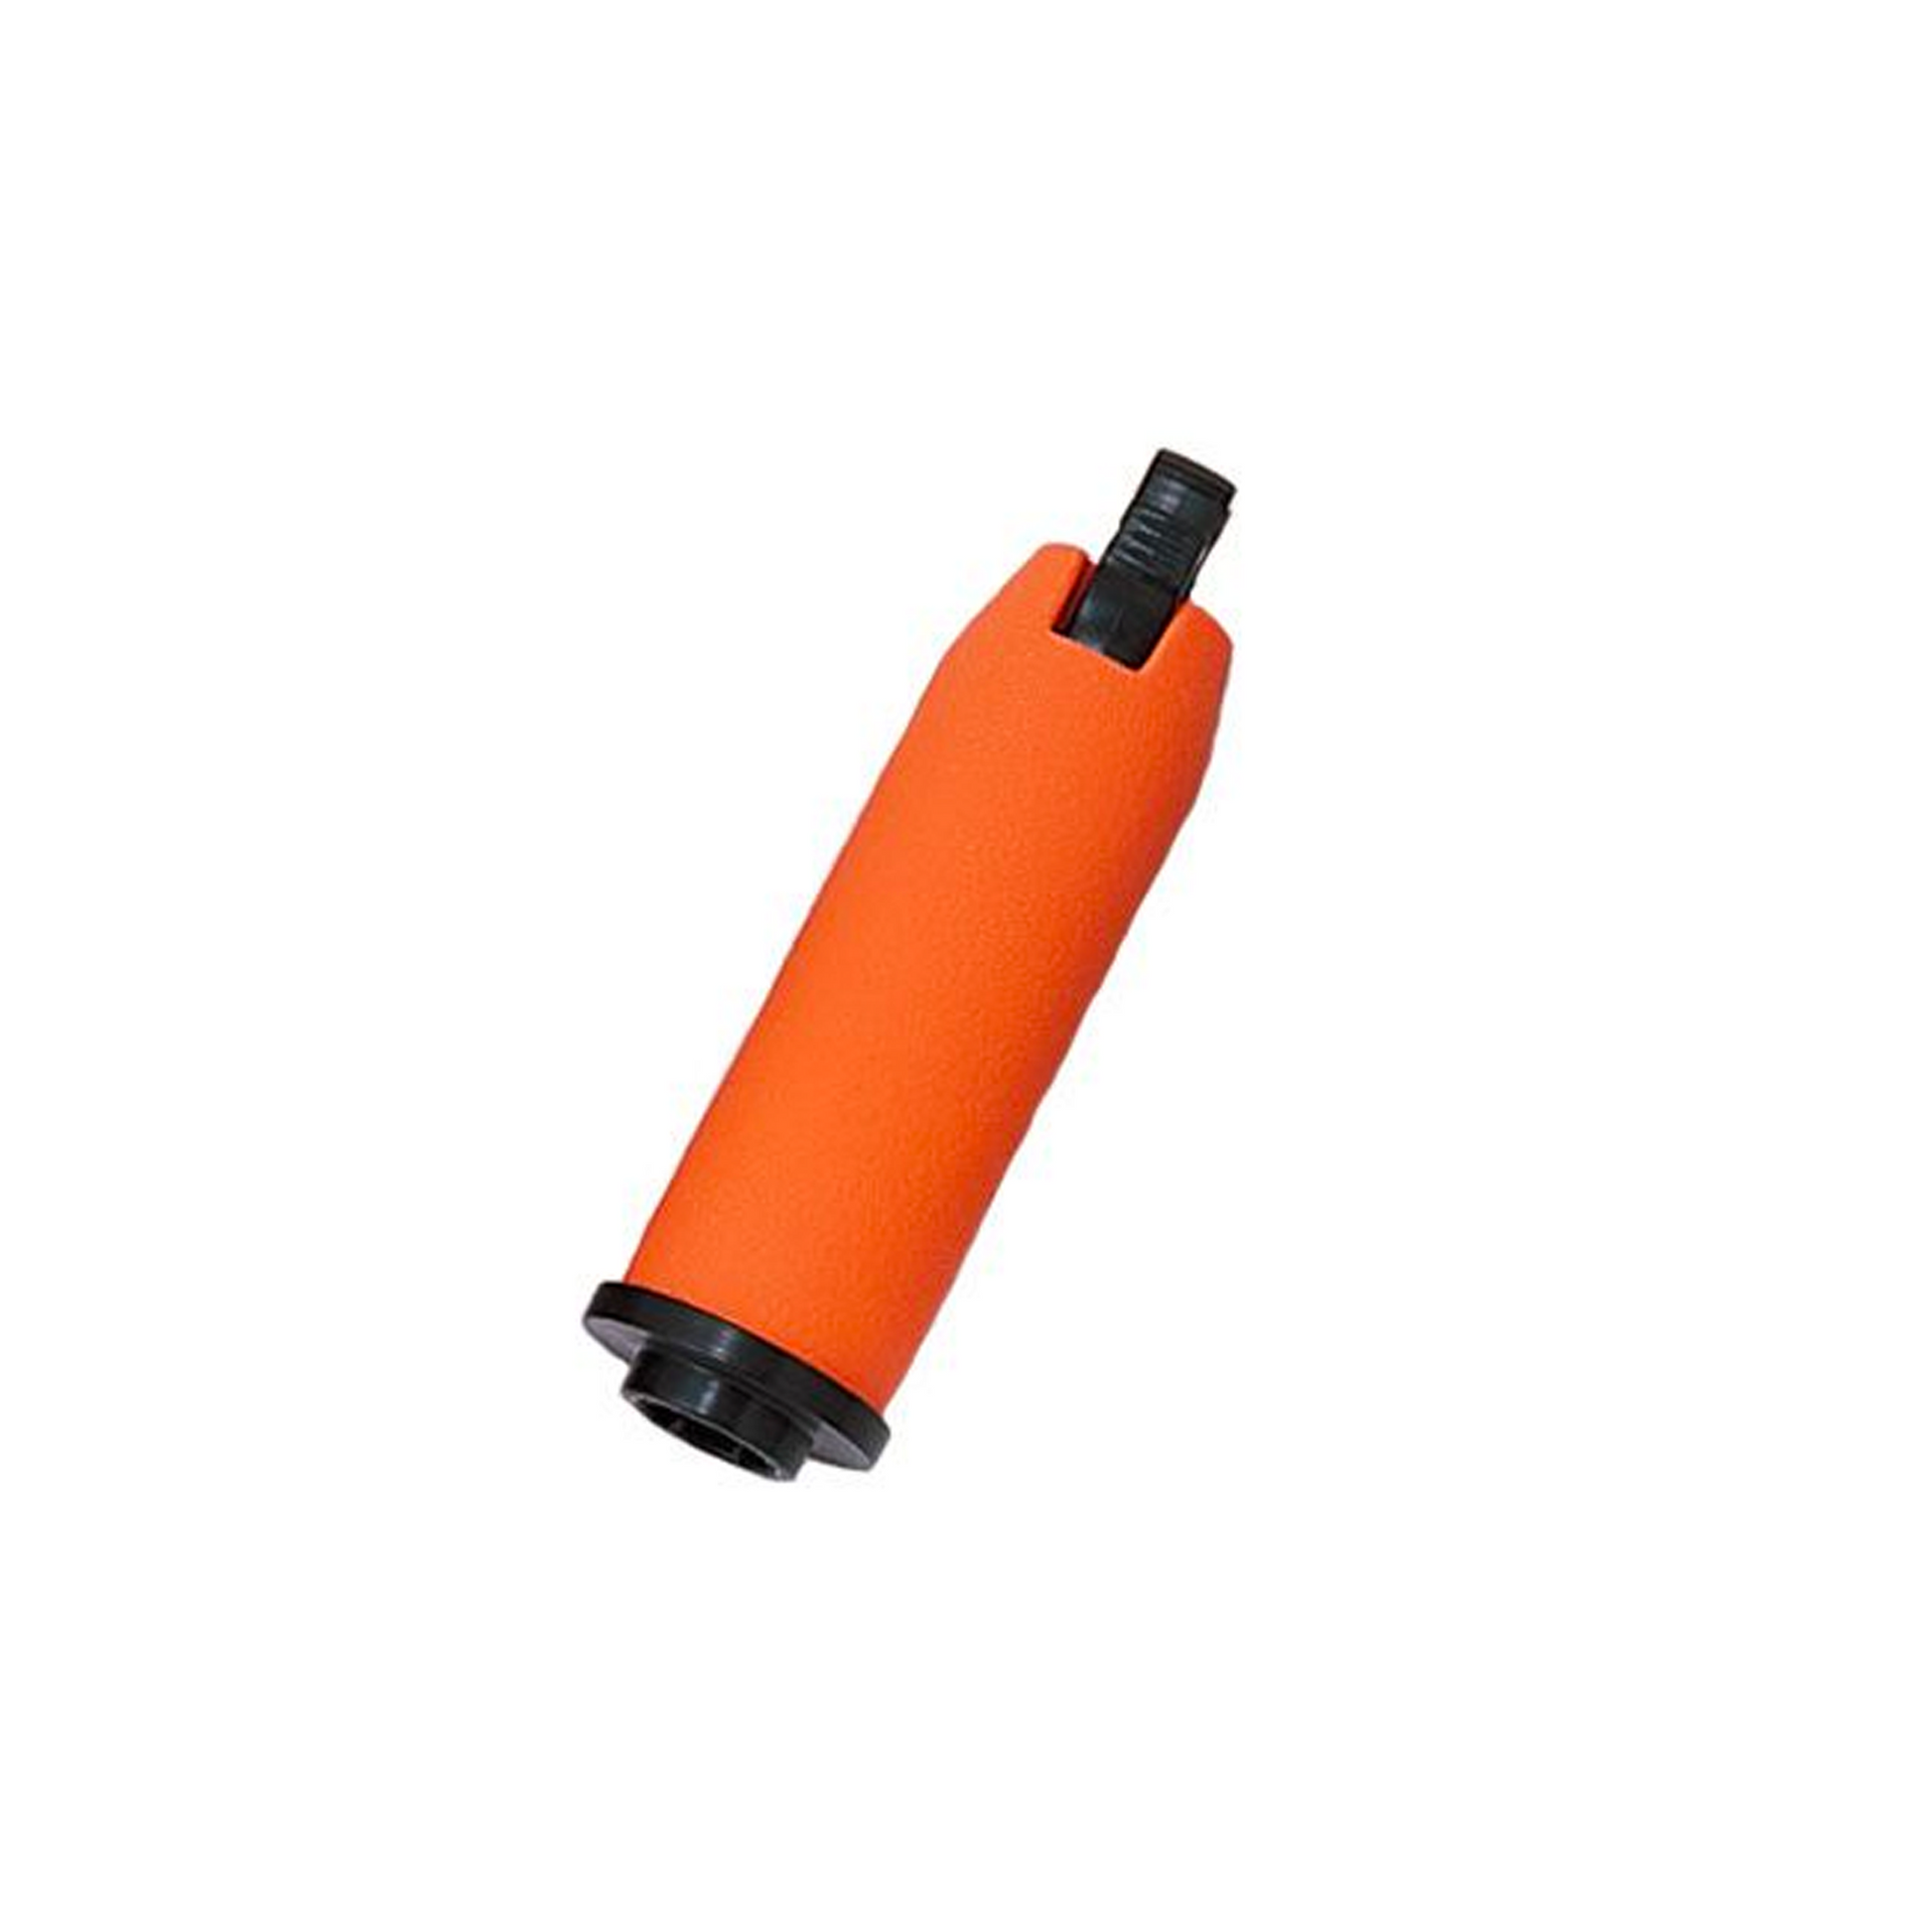 Hakko Products_ B3217 Orange Sleeve Assembly_ Soldering Accessories_ Hakko Products